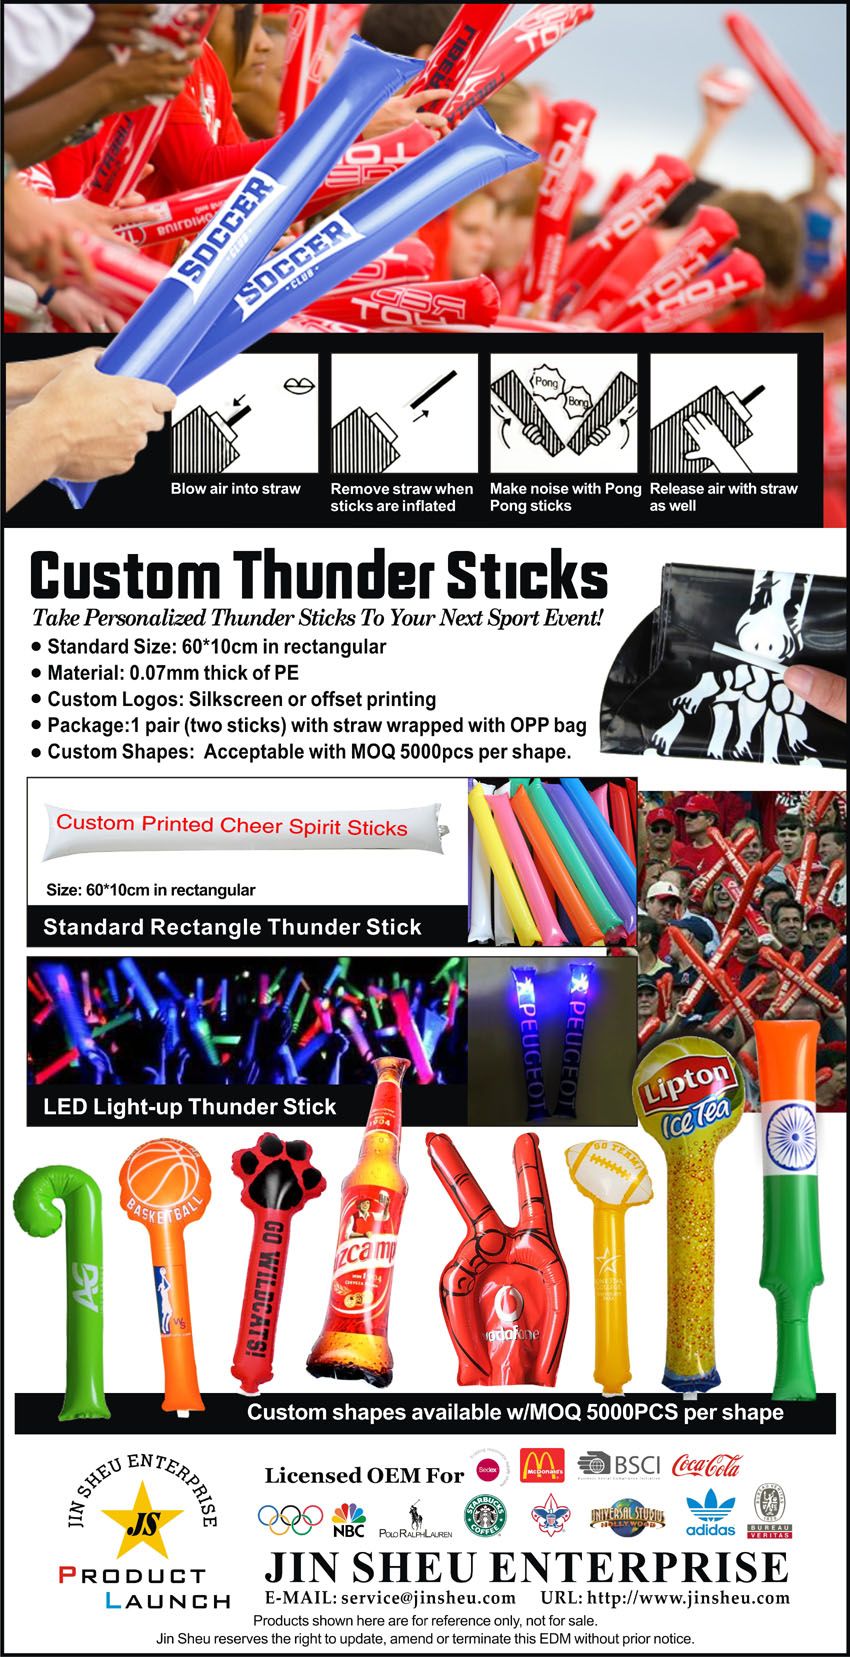 One-stop supplier of high-quality custom thunder sticks